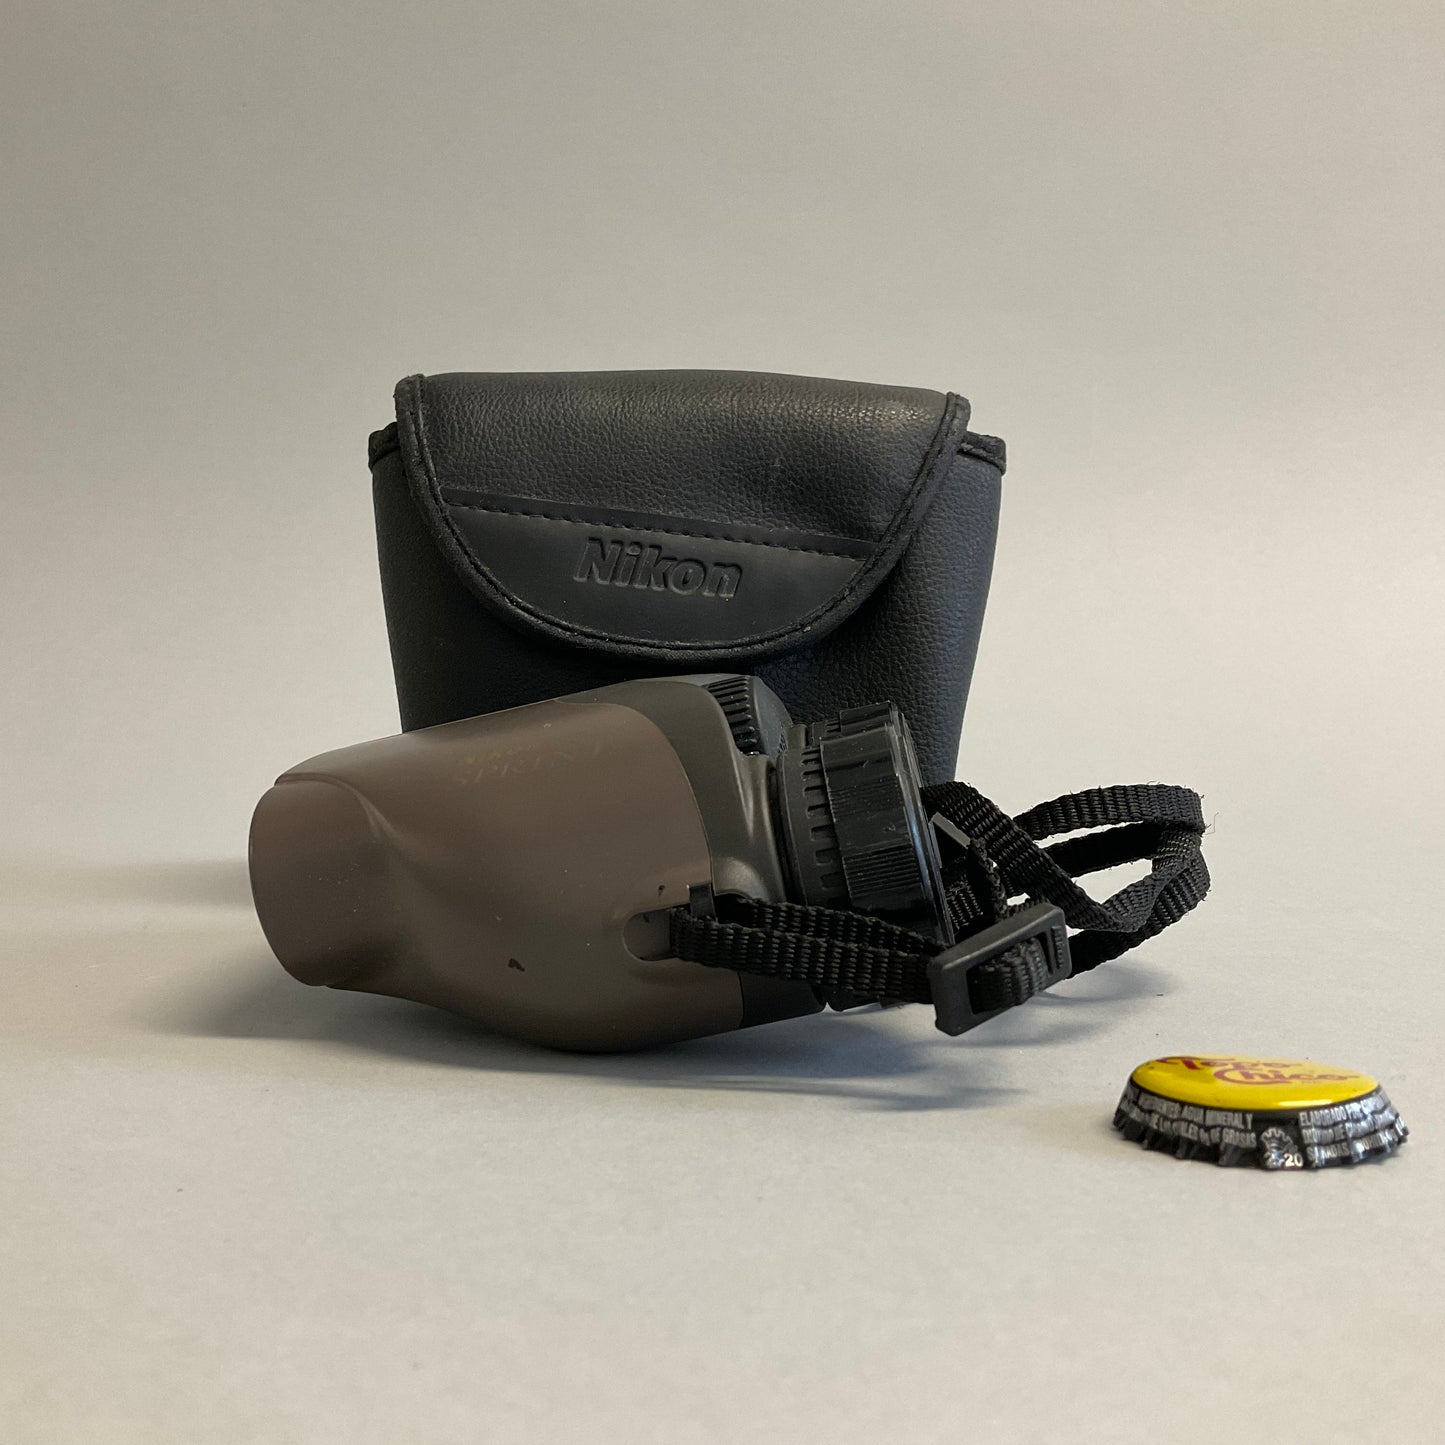 Nikon Binoculars with Bag